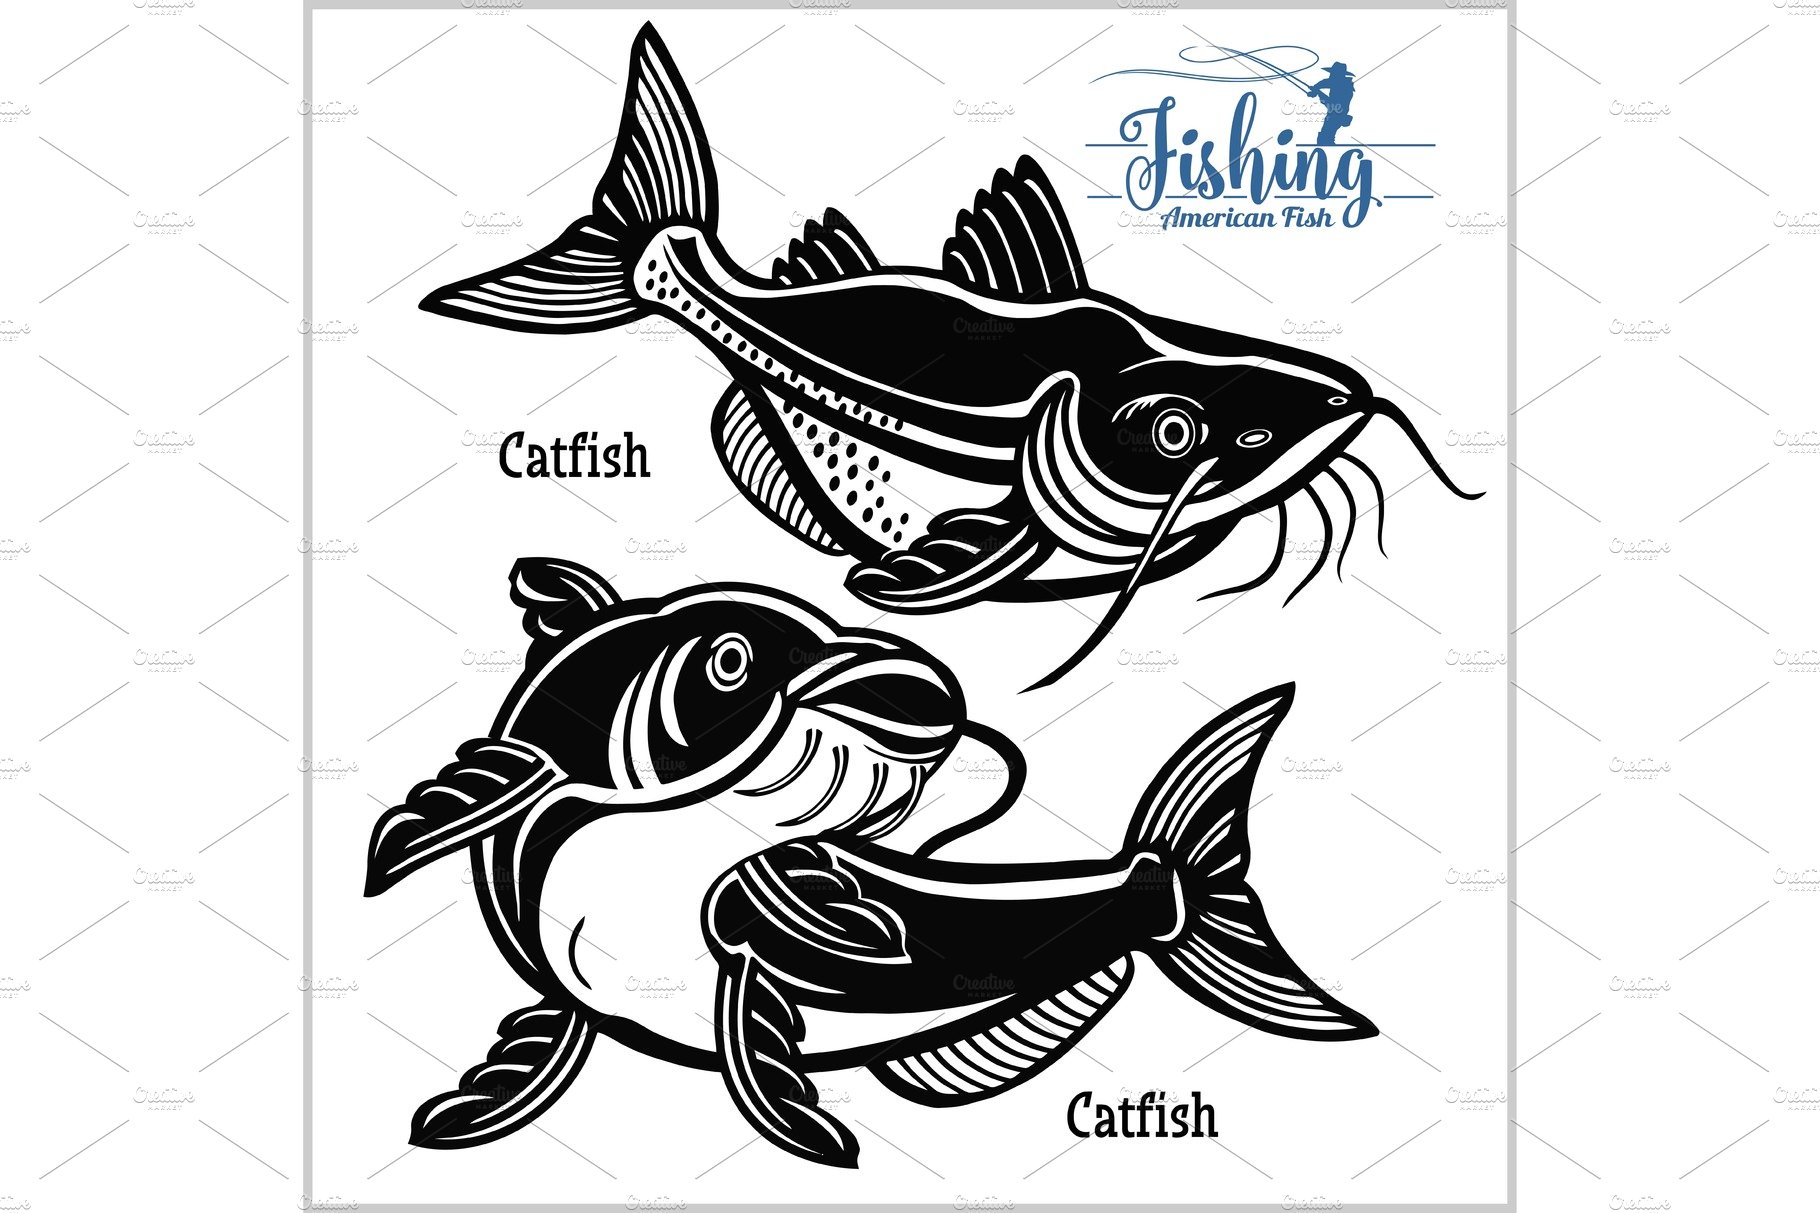 Catfish - vector set fishing on usa cover image.